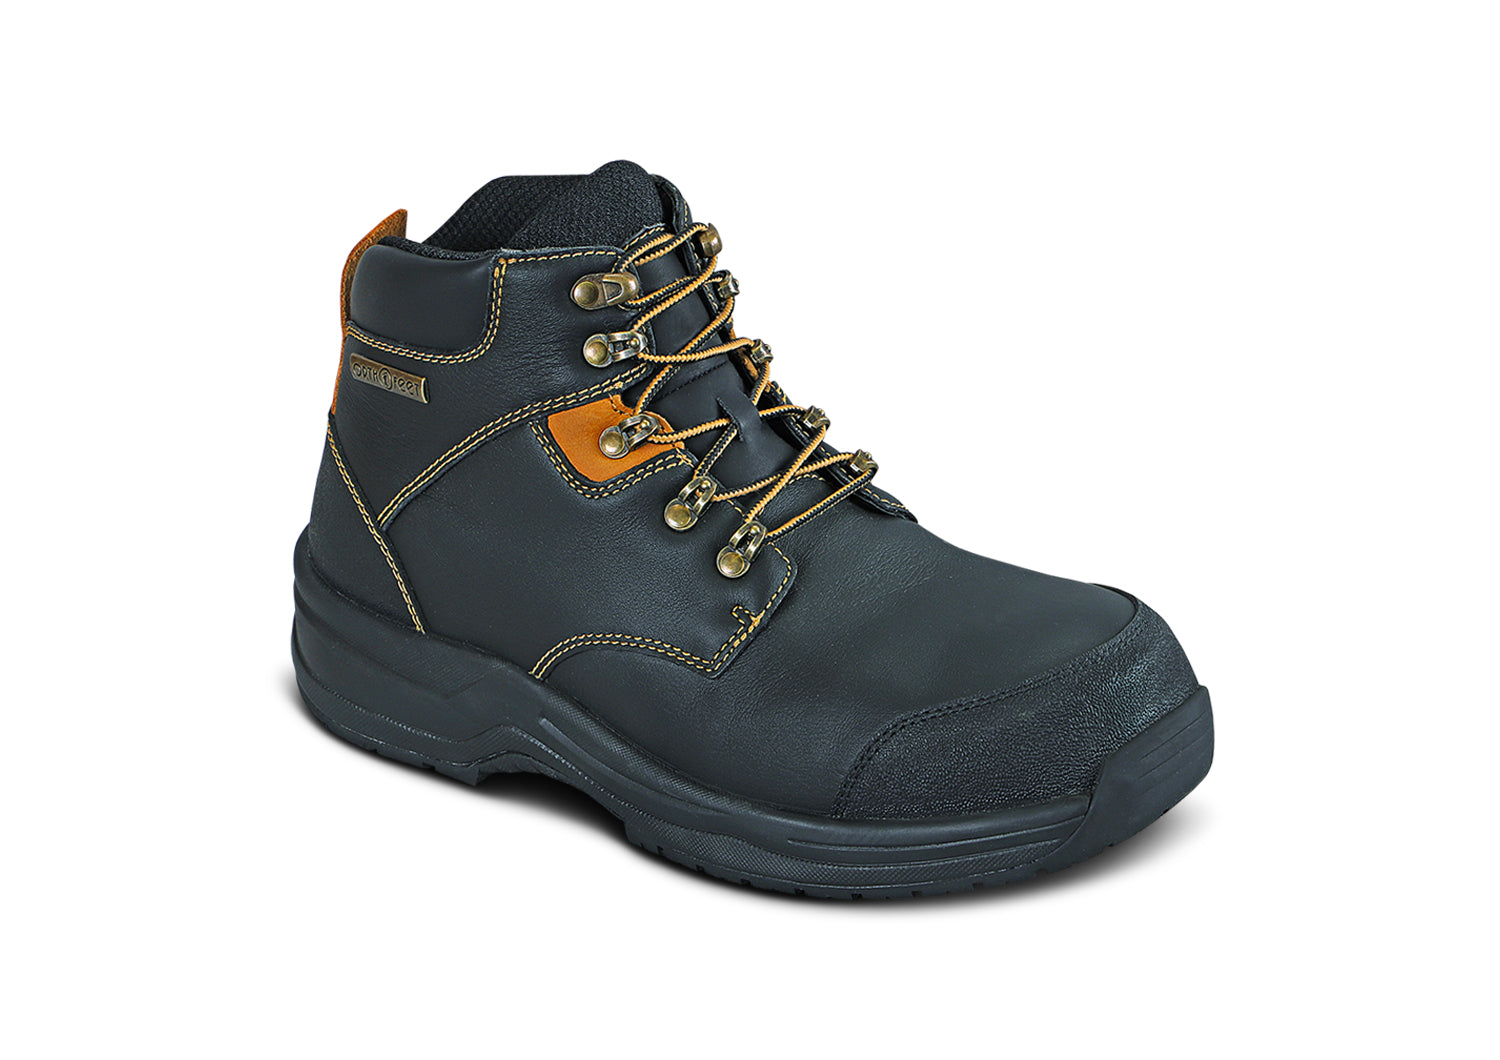 Men's Slip Resistant Orthopedic/Comfort Shoes - Work Safety Shoes